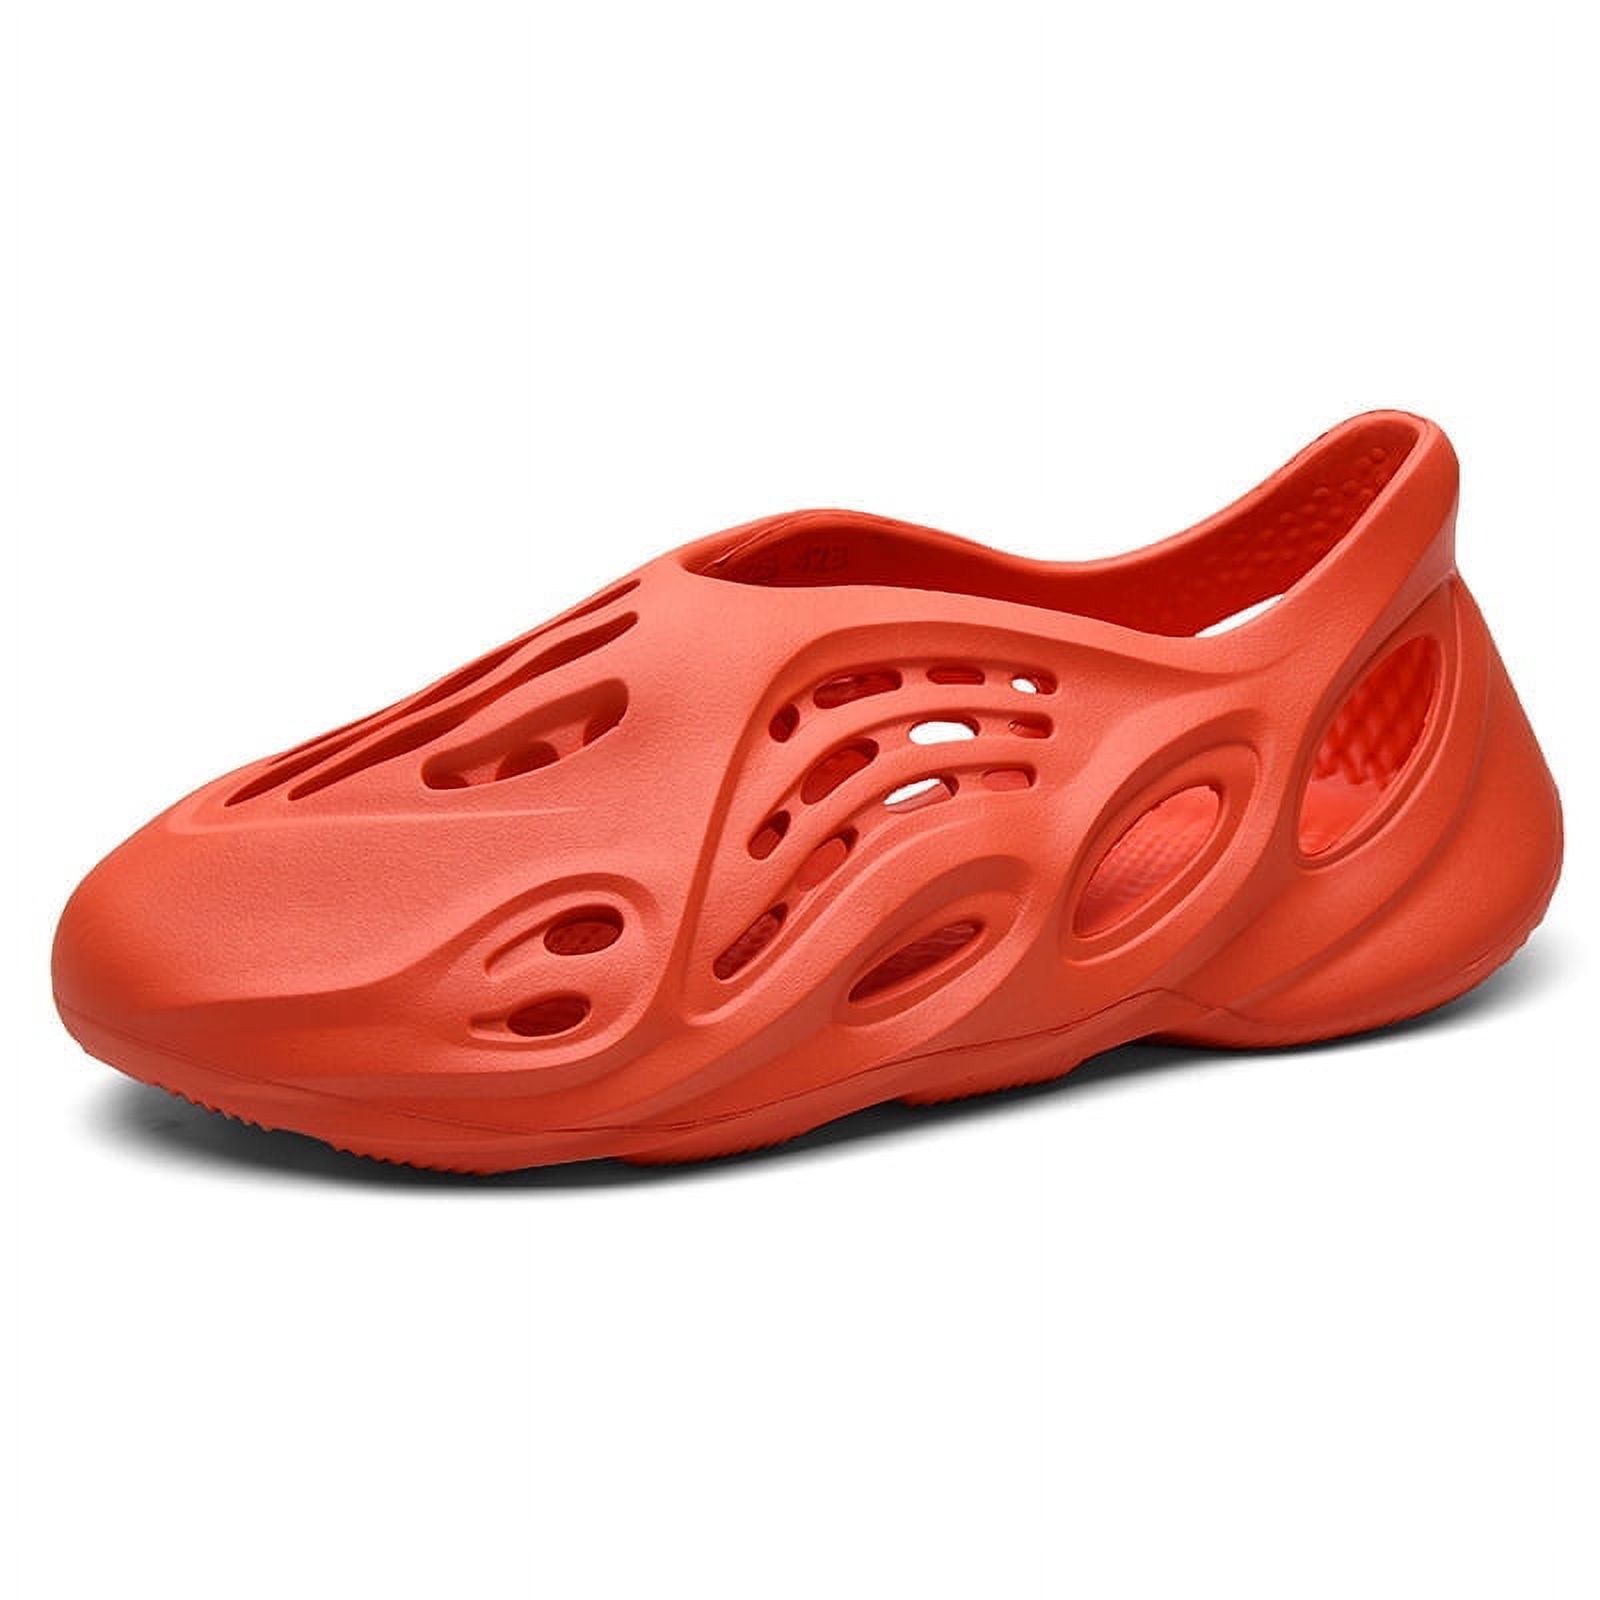 Foam Runner Shoes Women Men, Non-Slip Walking Sandals Cloud Slides Slippers Platform Pillow Sandals Comfy Lightweight Slip-On Foam Runners Sports Slides - image 2 of 5